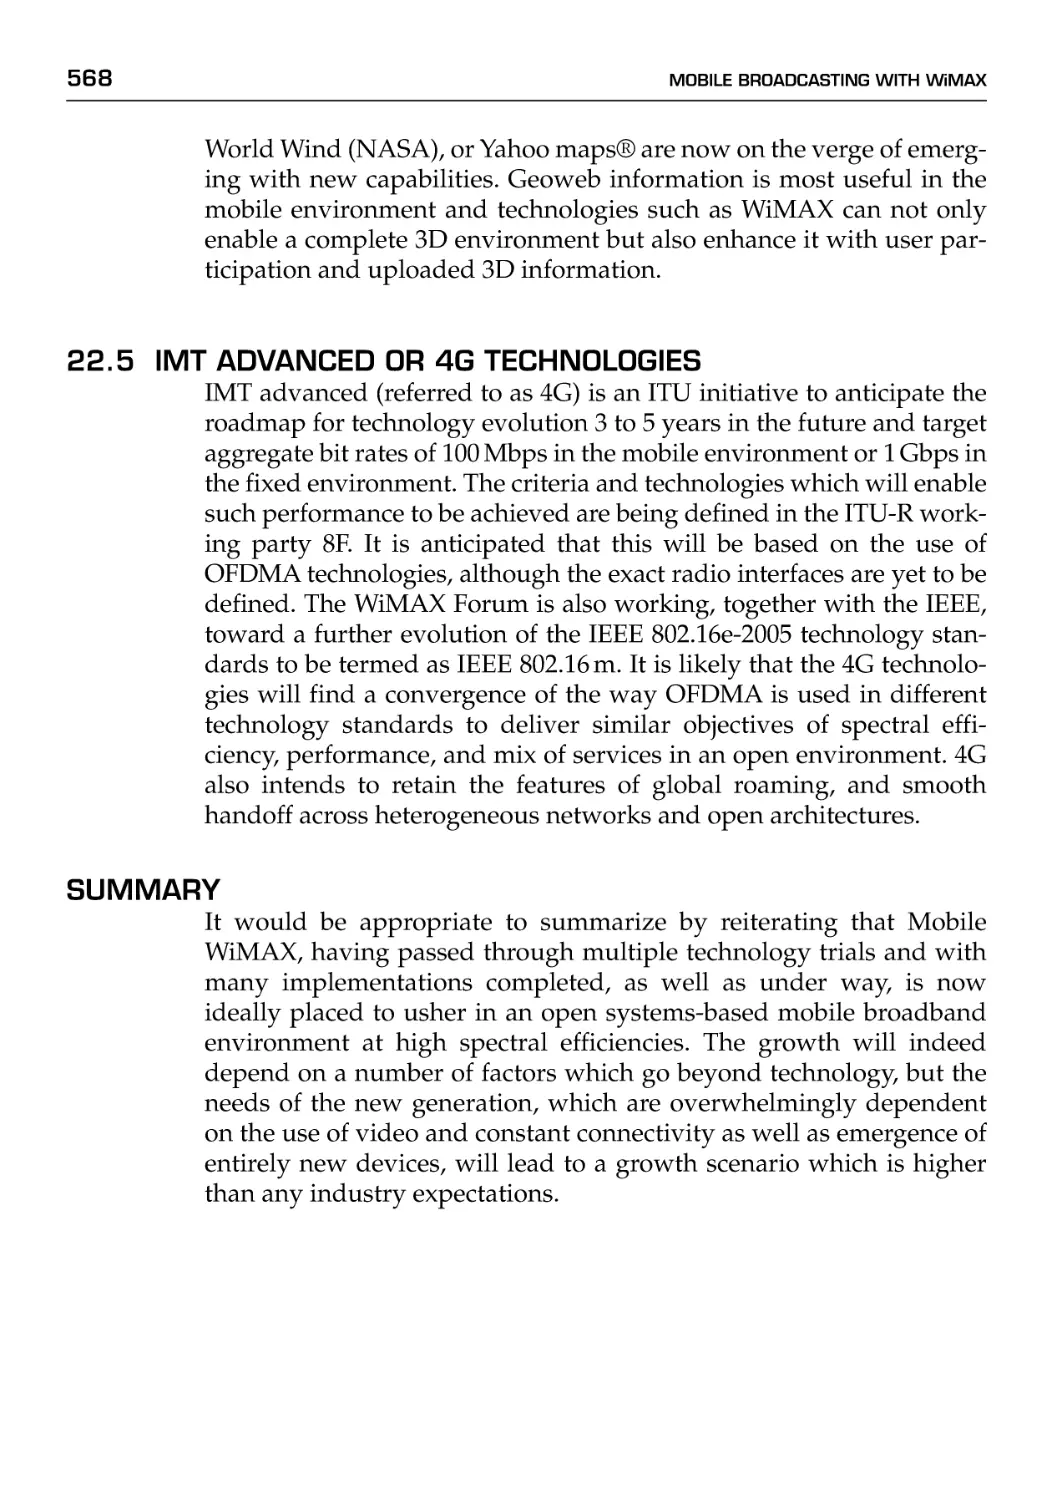 22.5 IMT Advanced or 4G Technologies
Summary